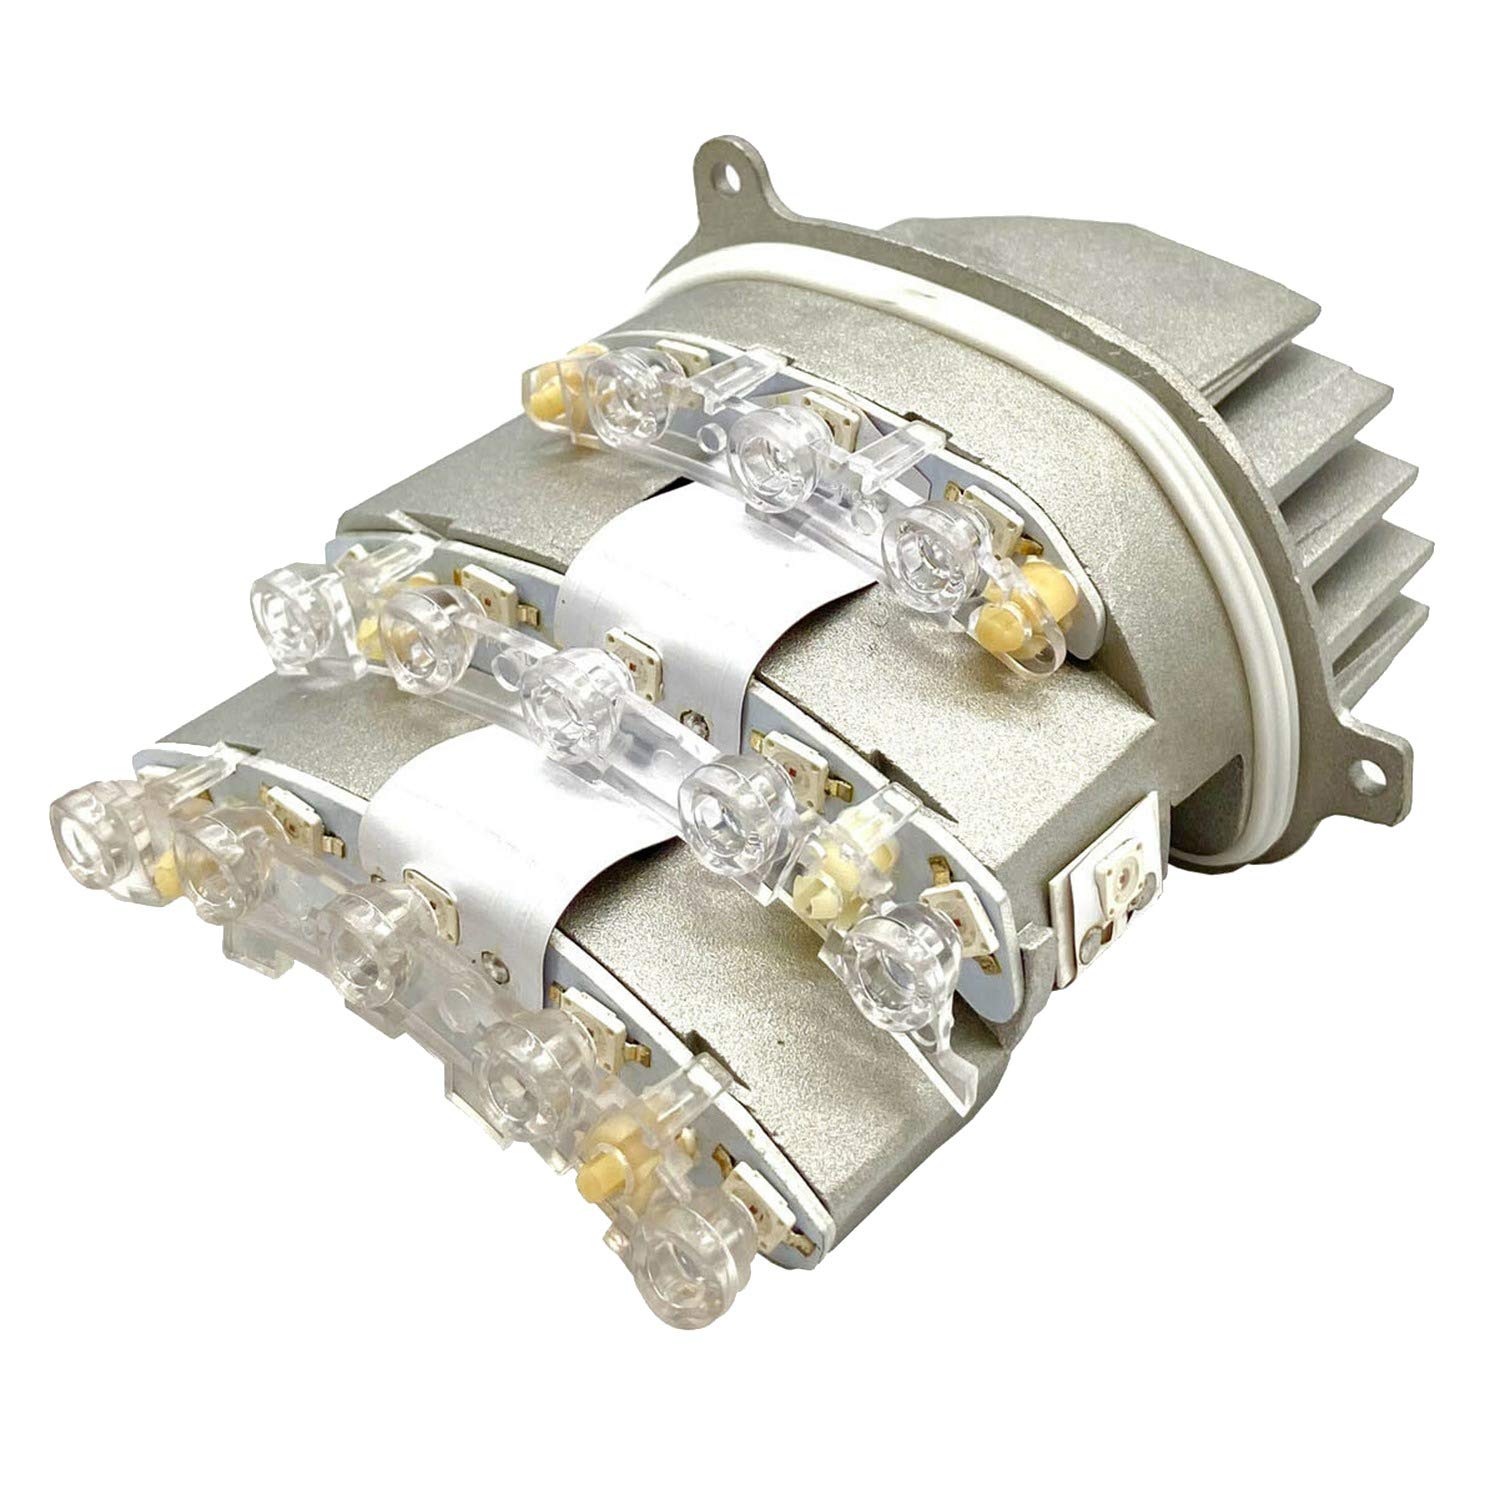 LED-Blinker-Dioden-Anzeigemodul 63127245814 für E90 E91 LCI 328I 335I rechts von Lodokdre